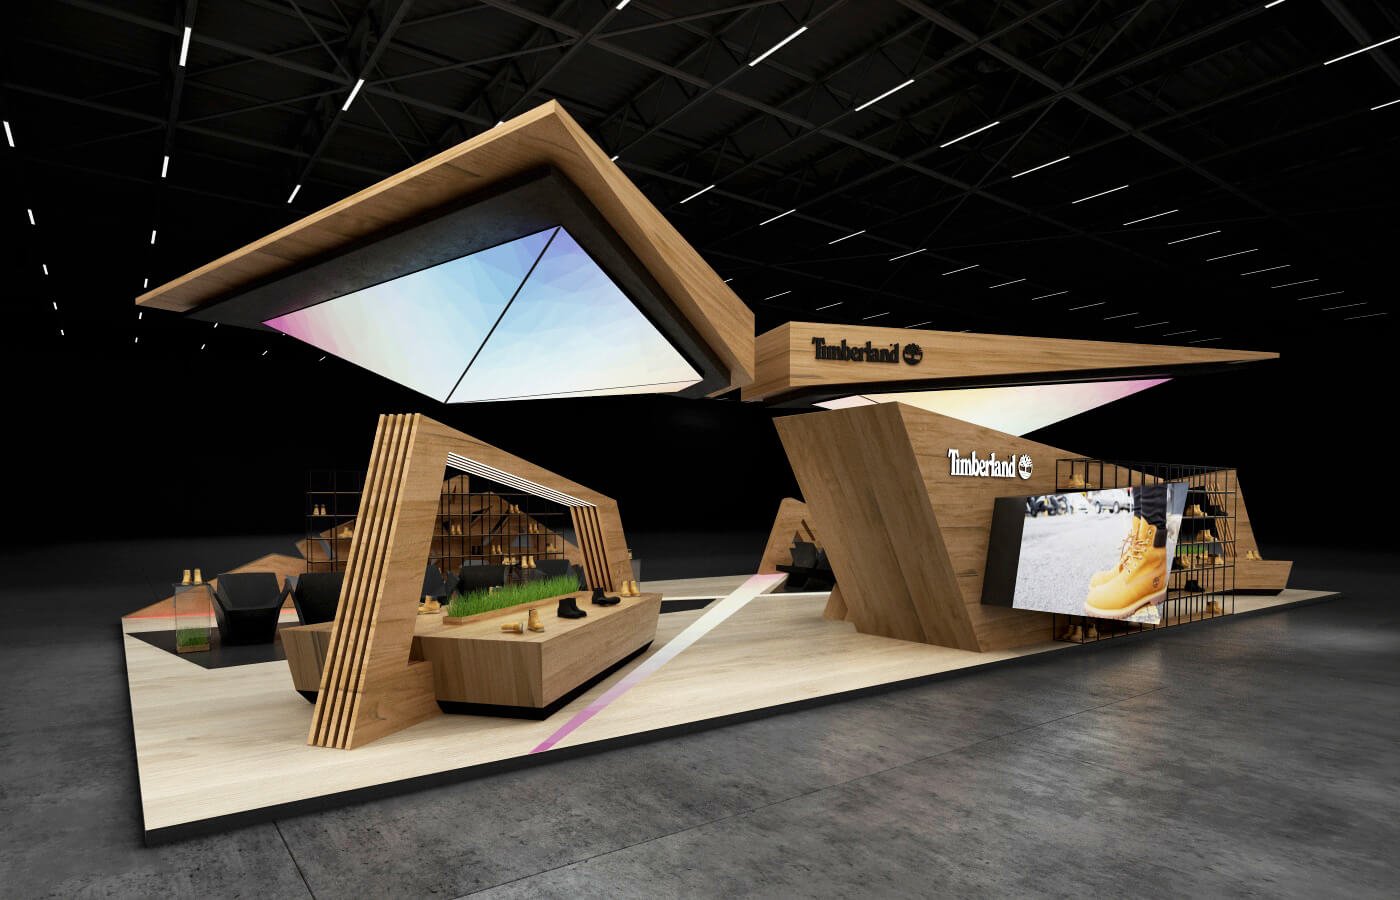 Exhibition Stand Builder in Dubai, Saudi Arabia, Italy, Germany